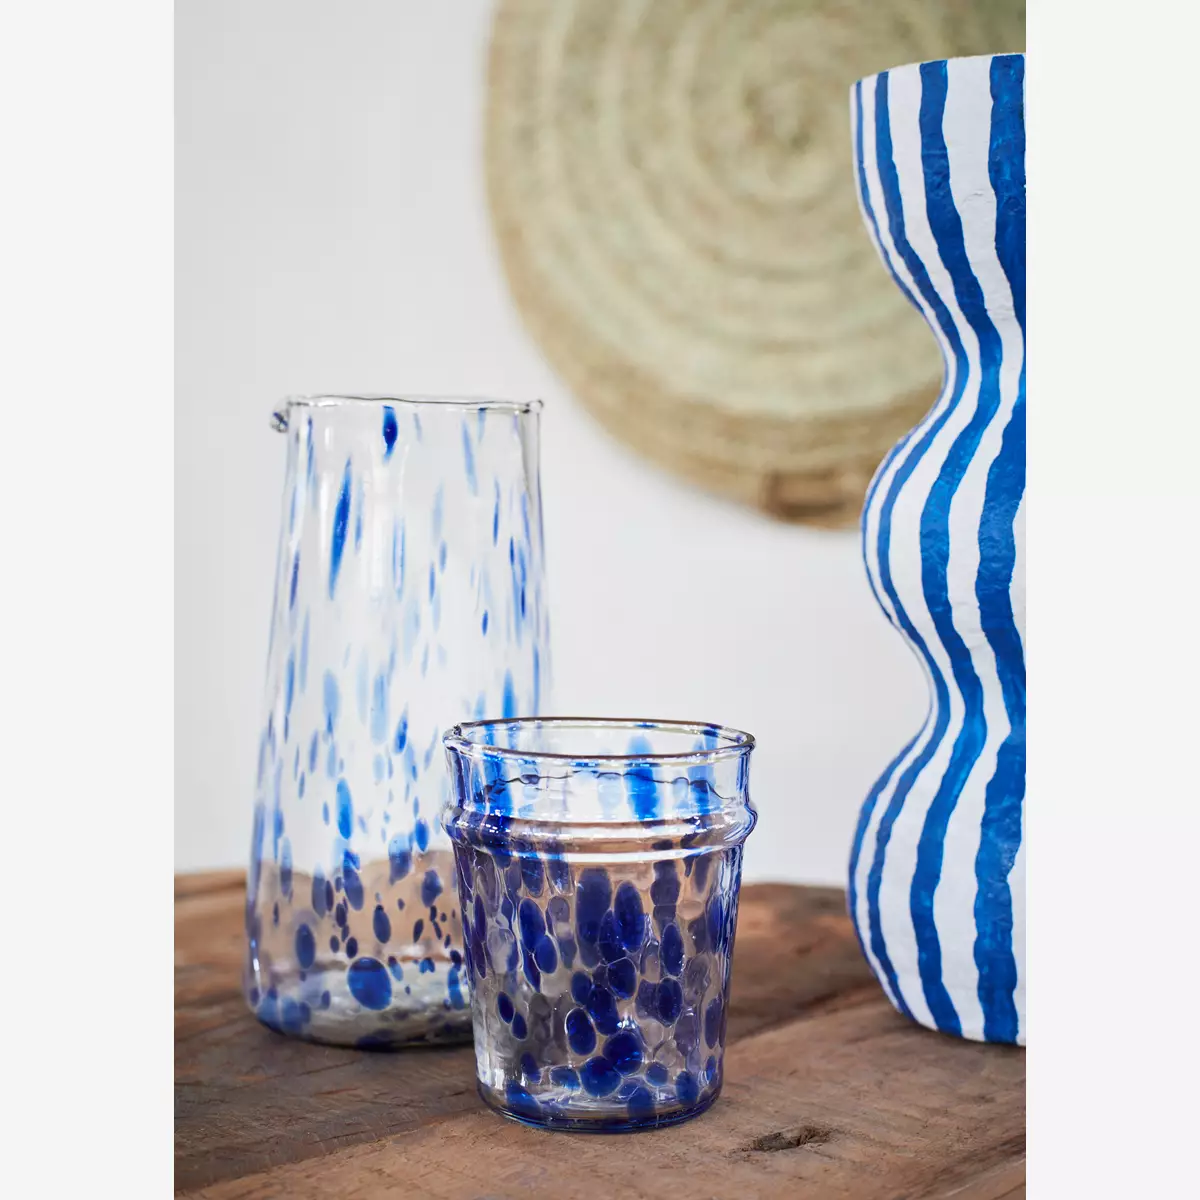 Vaso de cristal soplado elaborado artesanalmente al estilo mallorquín.